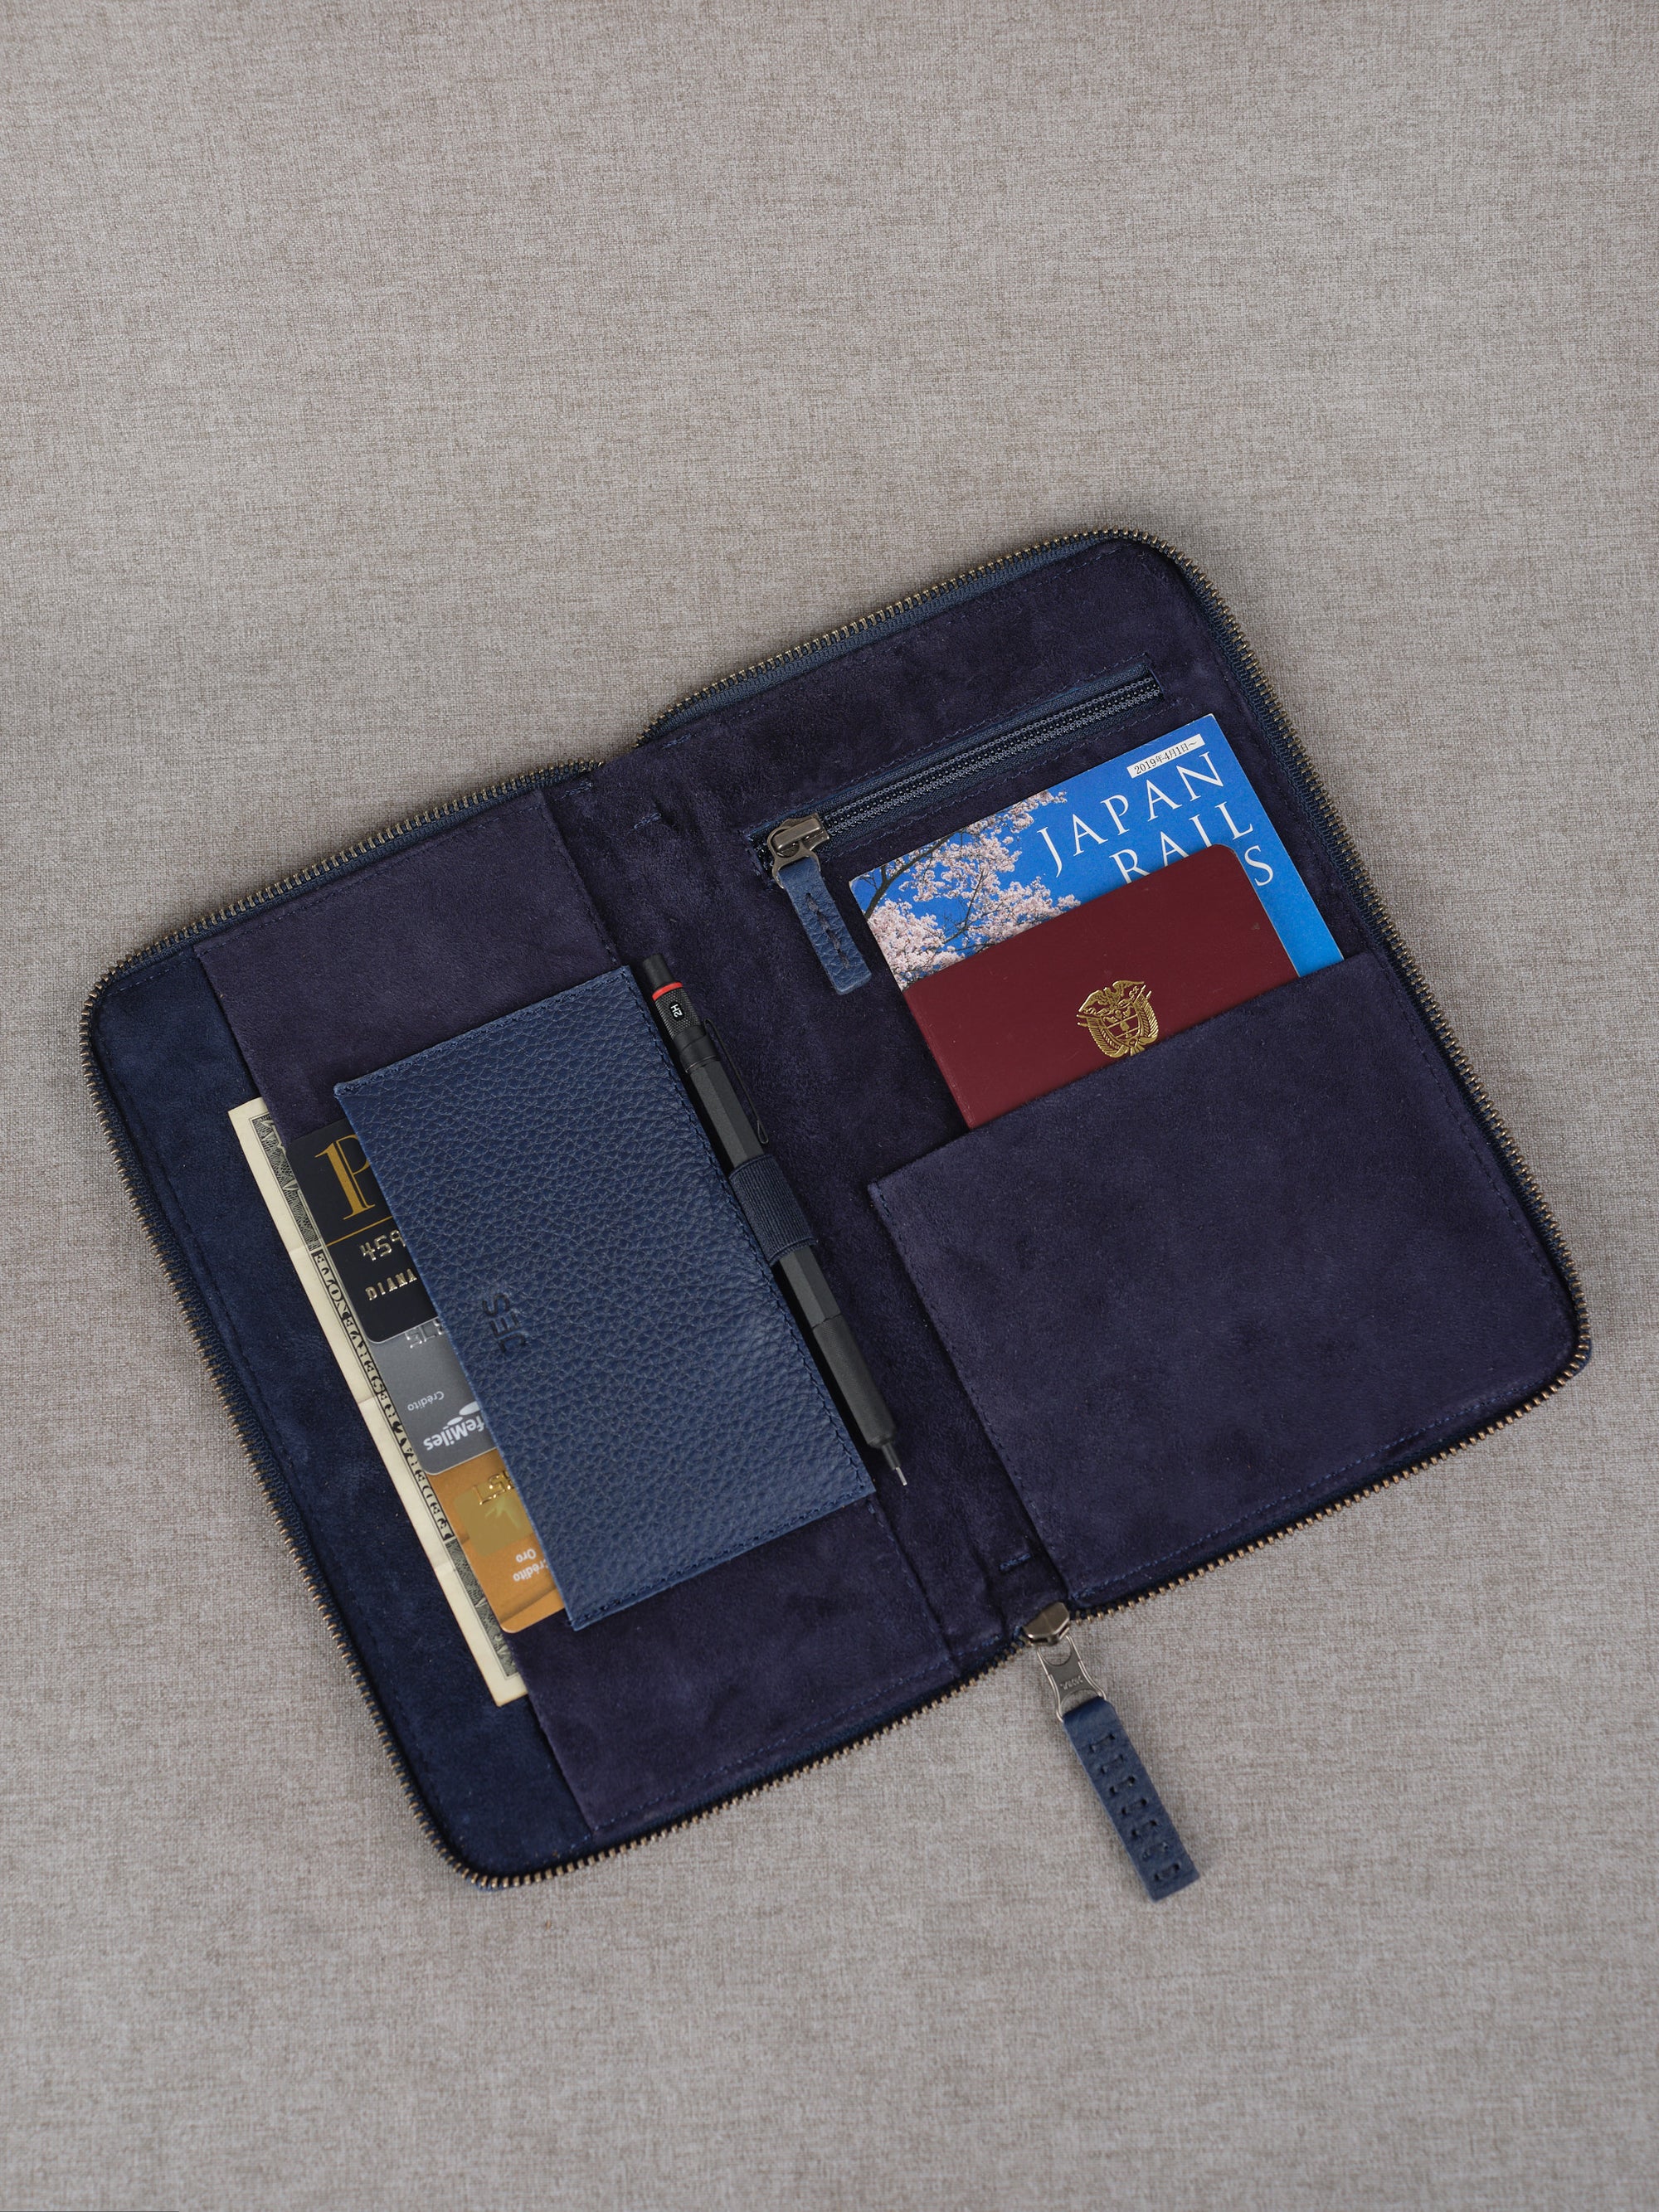 Leather passport holder navy blue by Capra